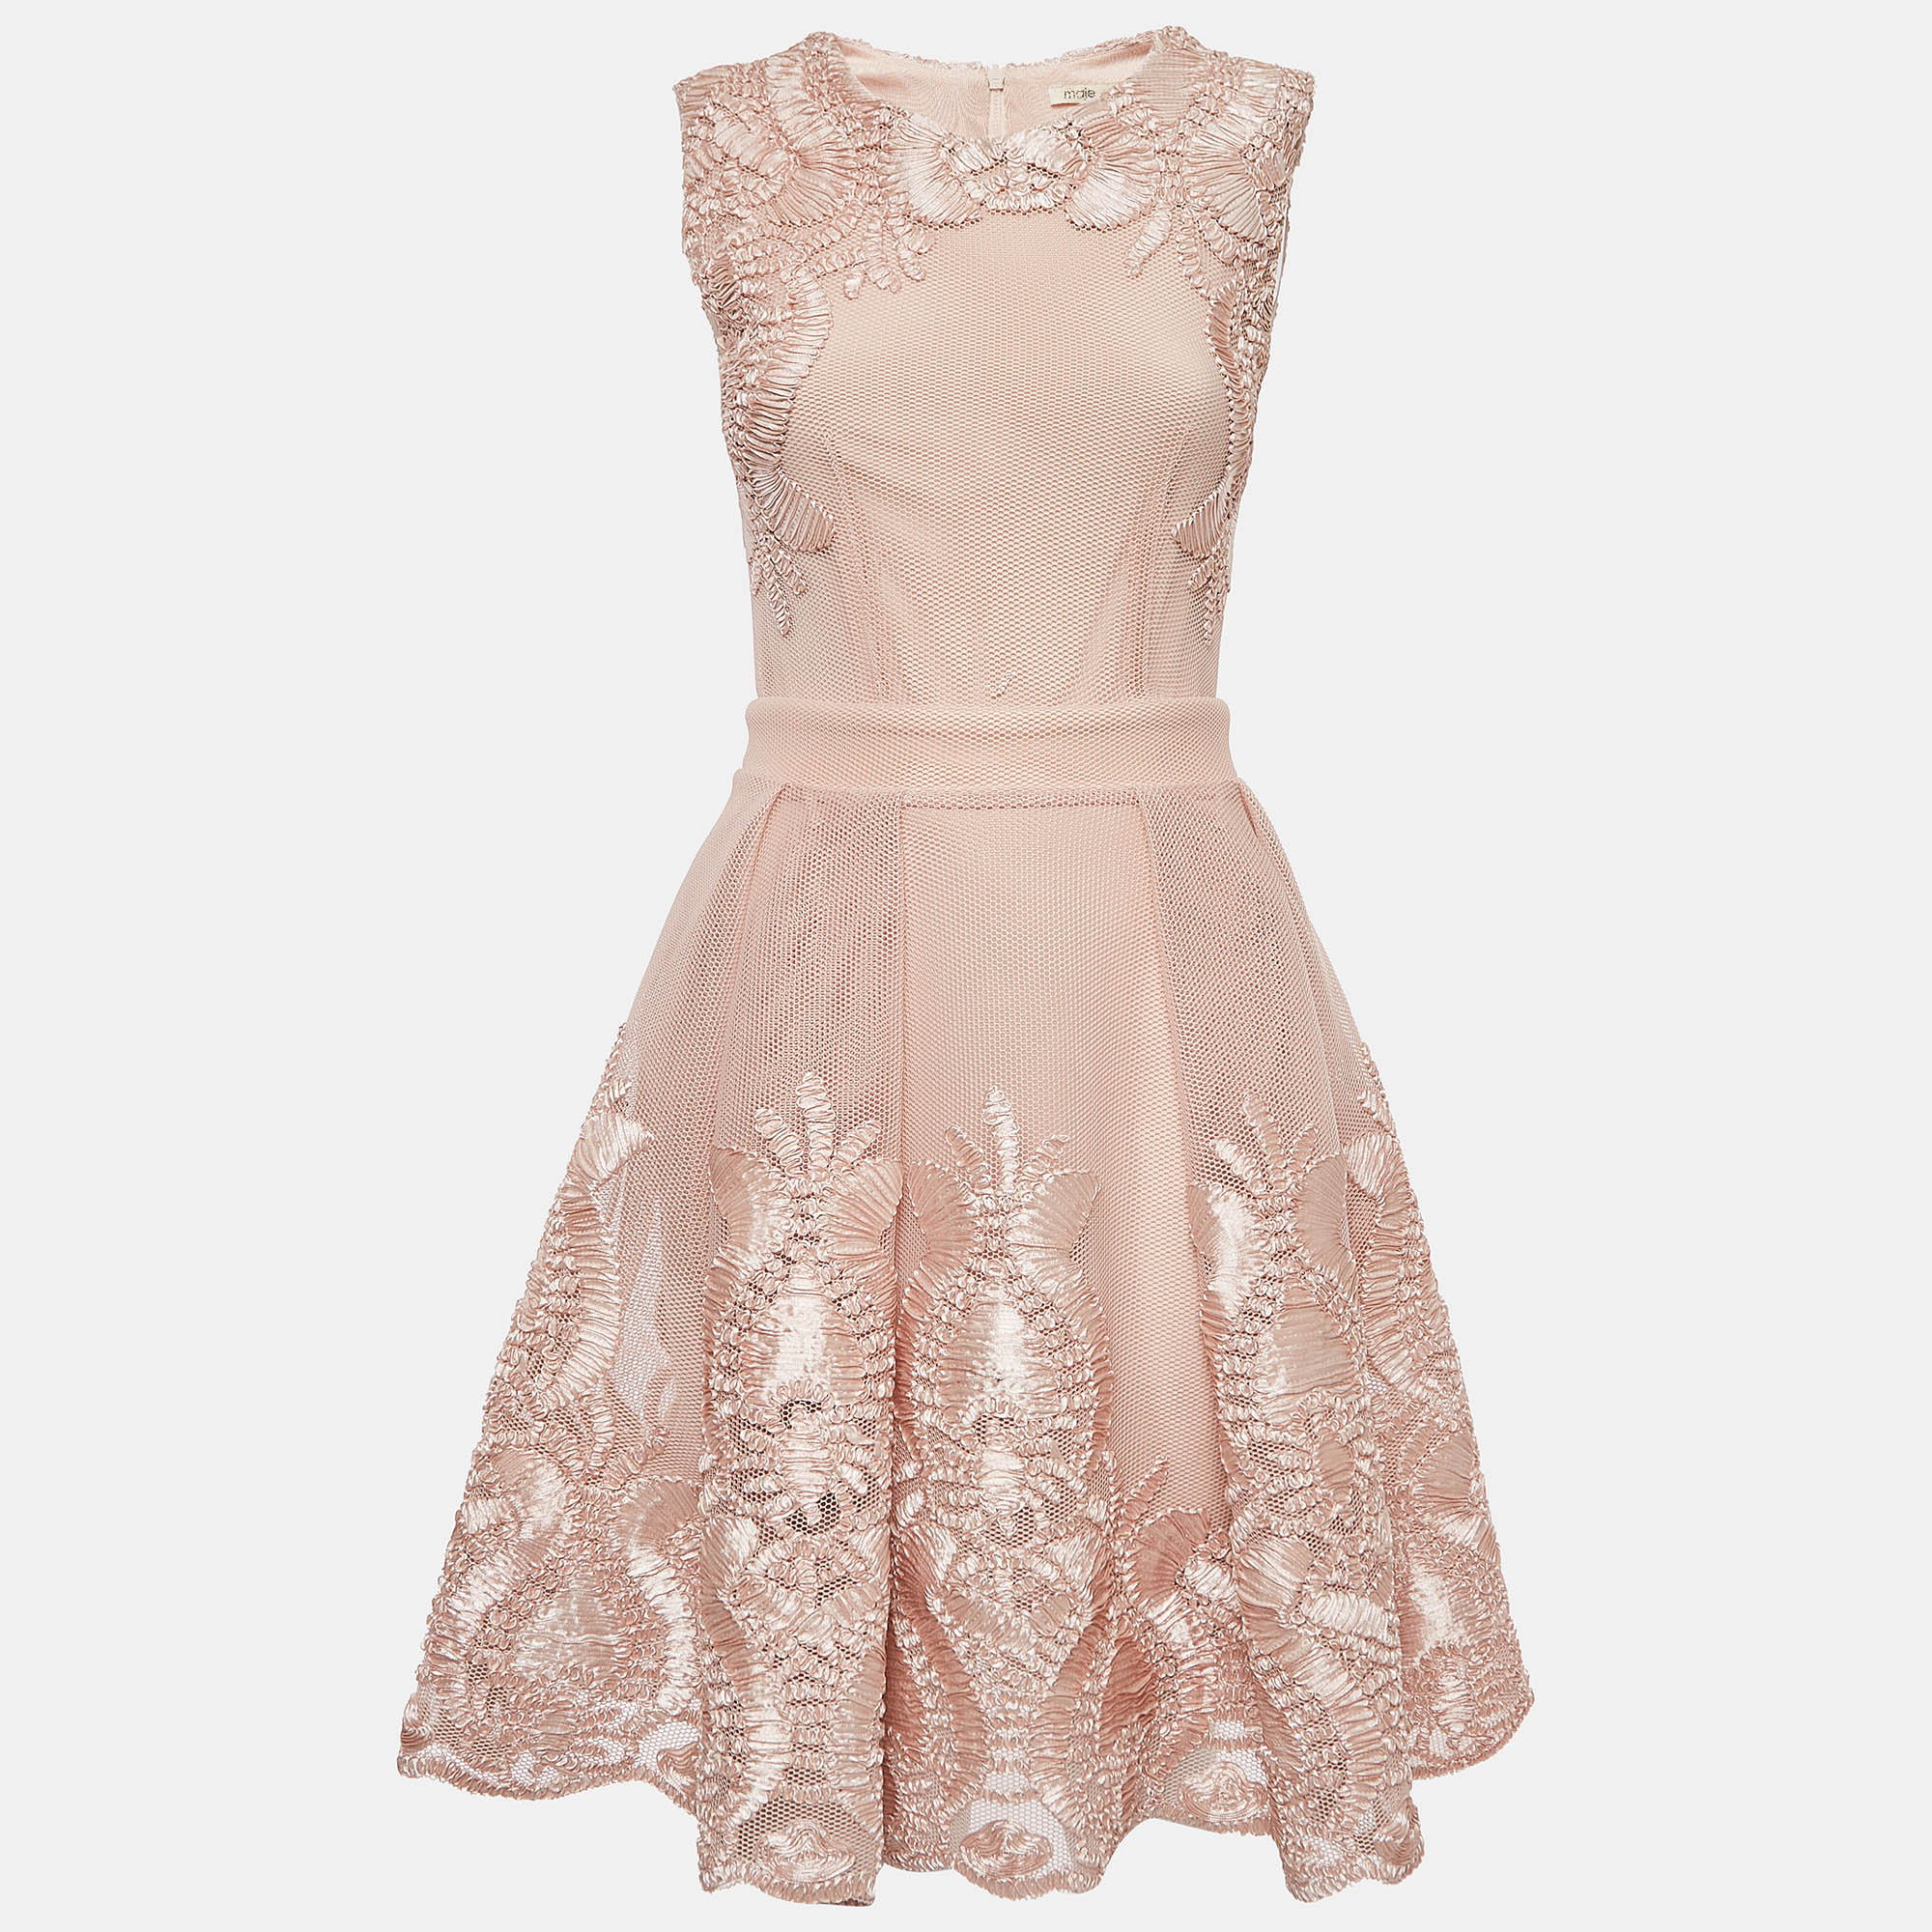 Maje pink nude floral embroidered mesh short dress s